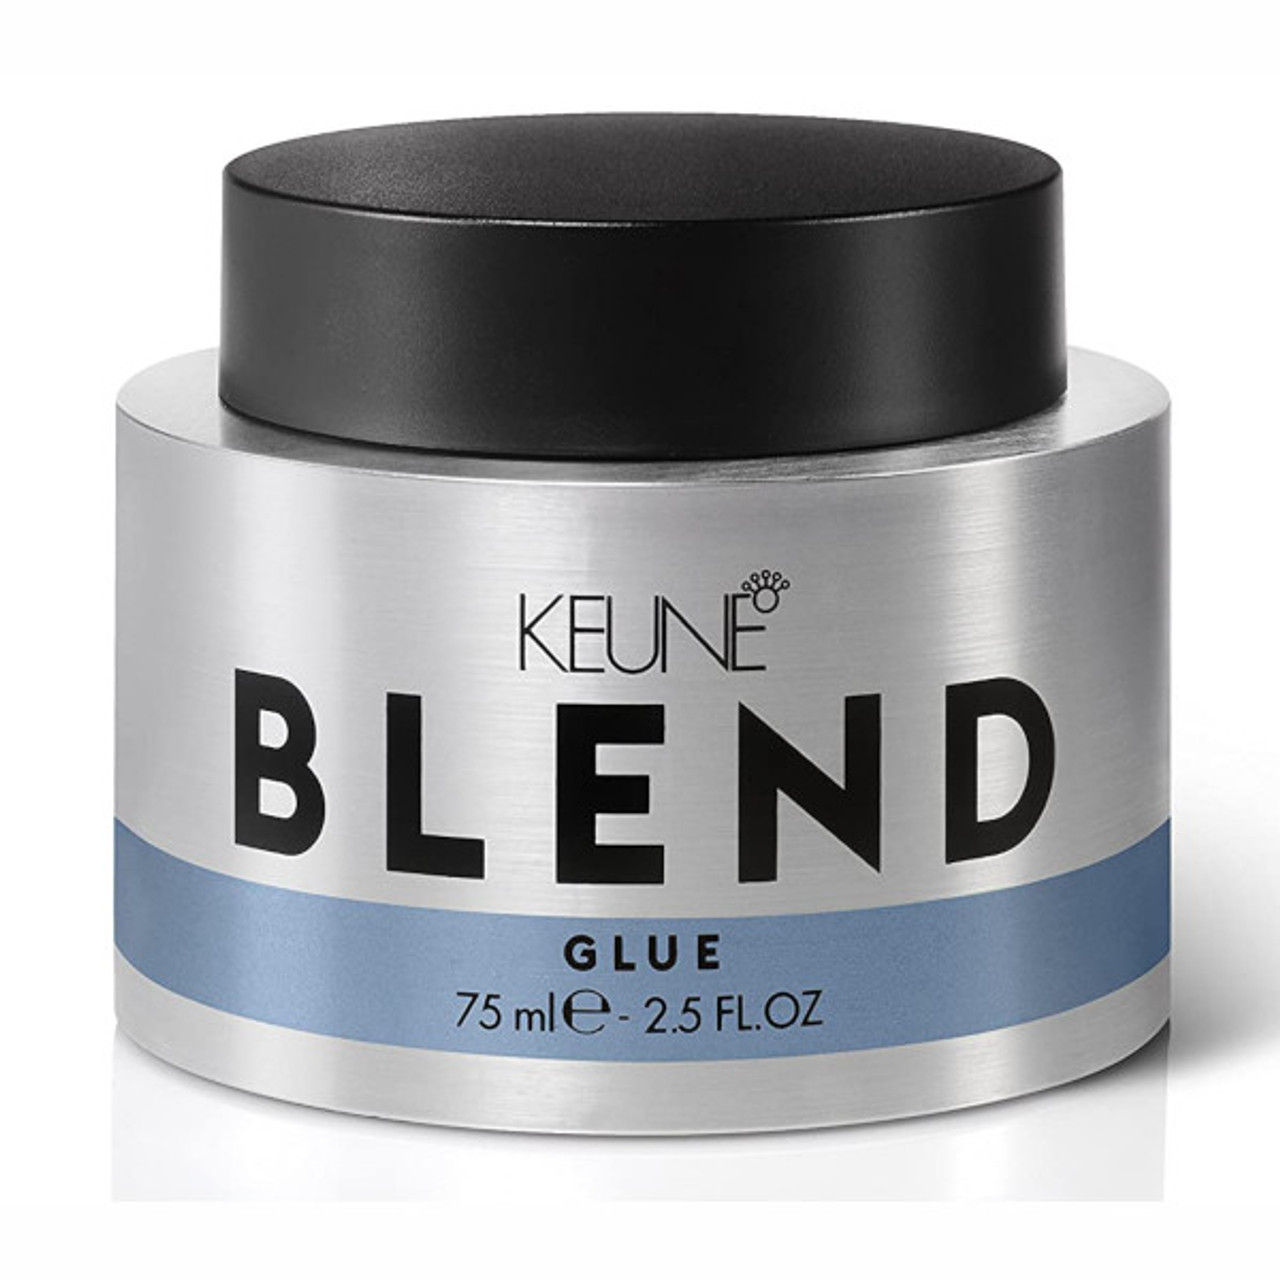 Keune BLEND Glue - 2.5 oz